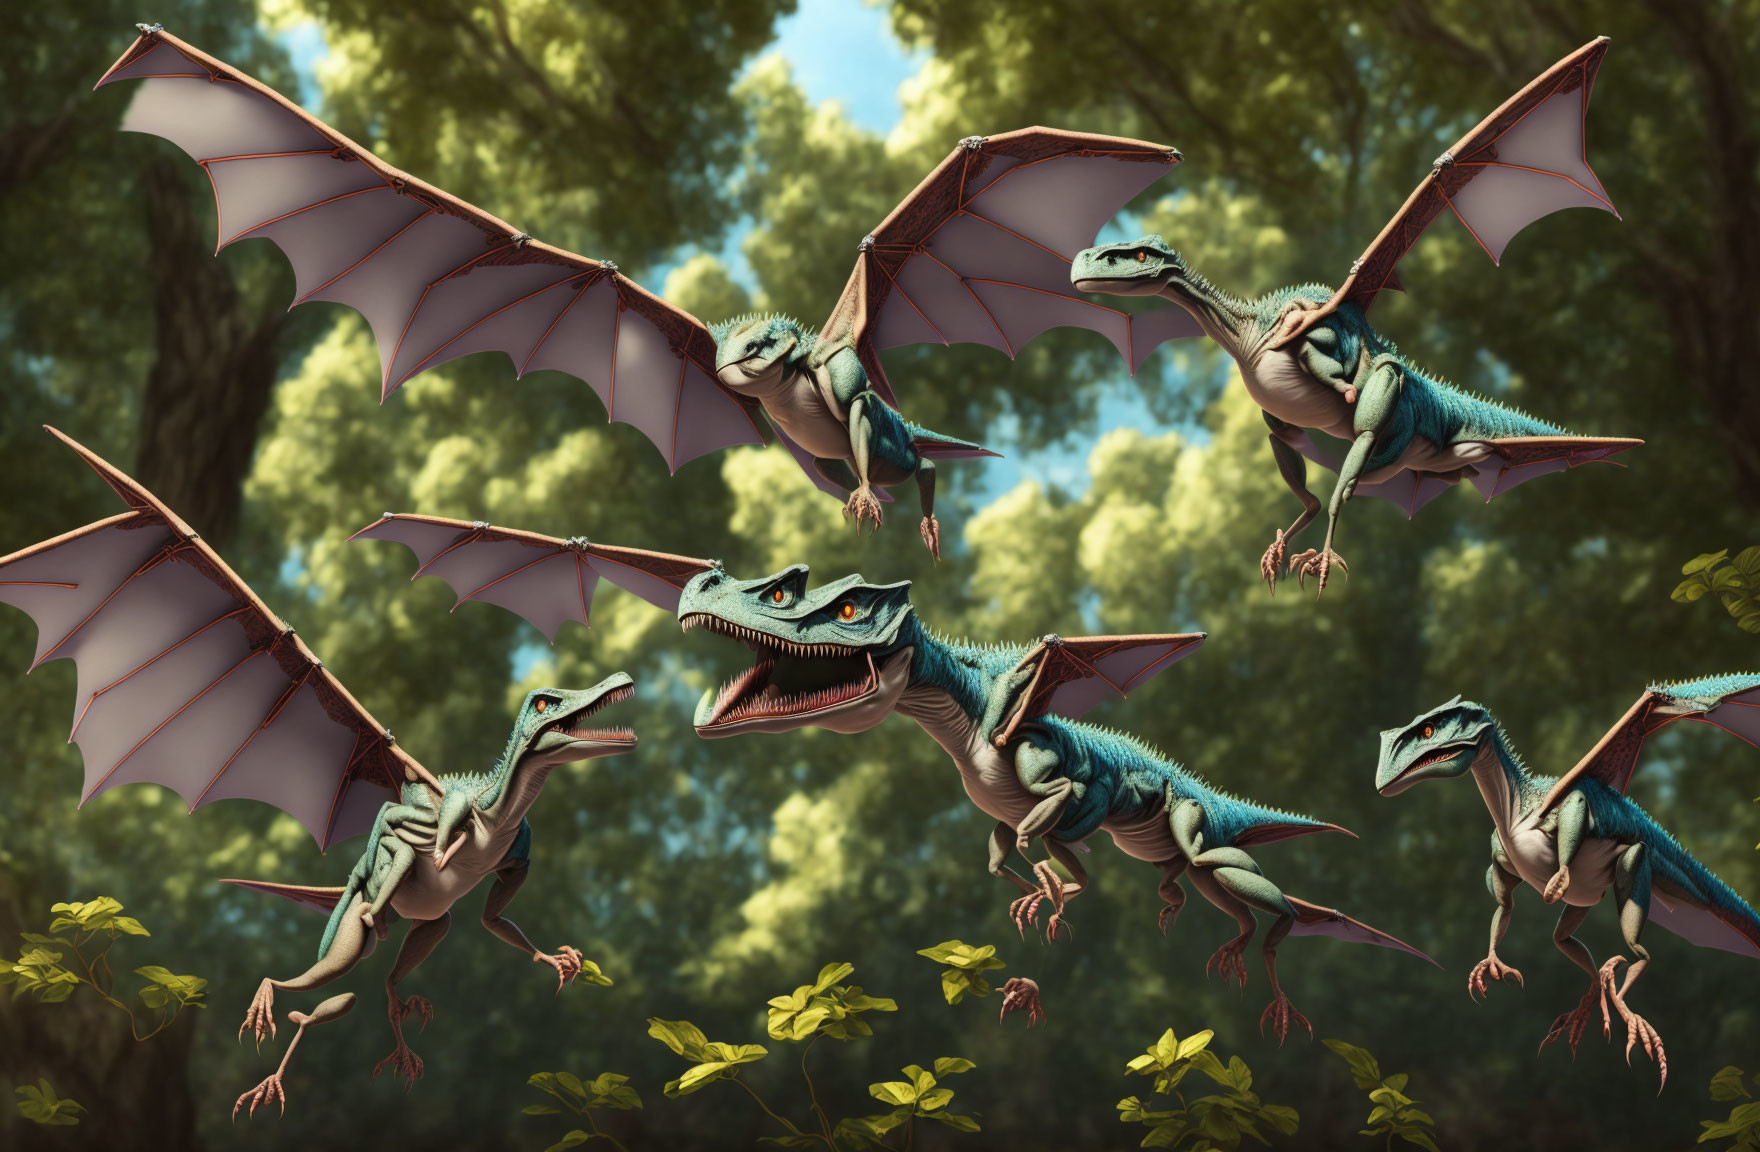 Prehistoric forest scene: Pterosaurs flying among lush foliage